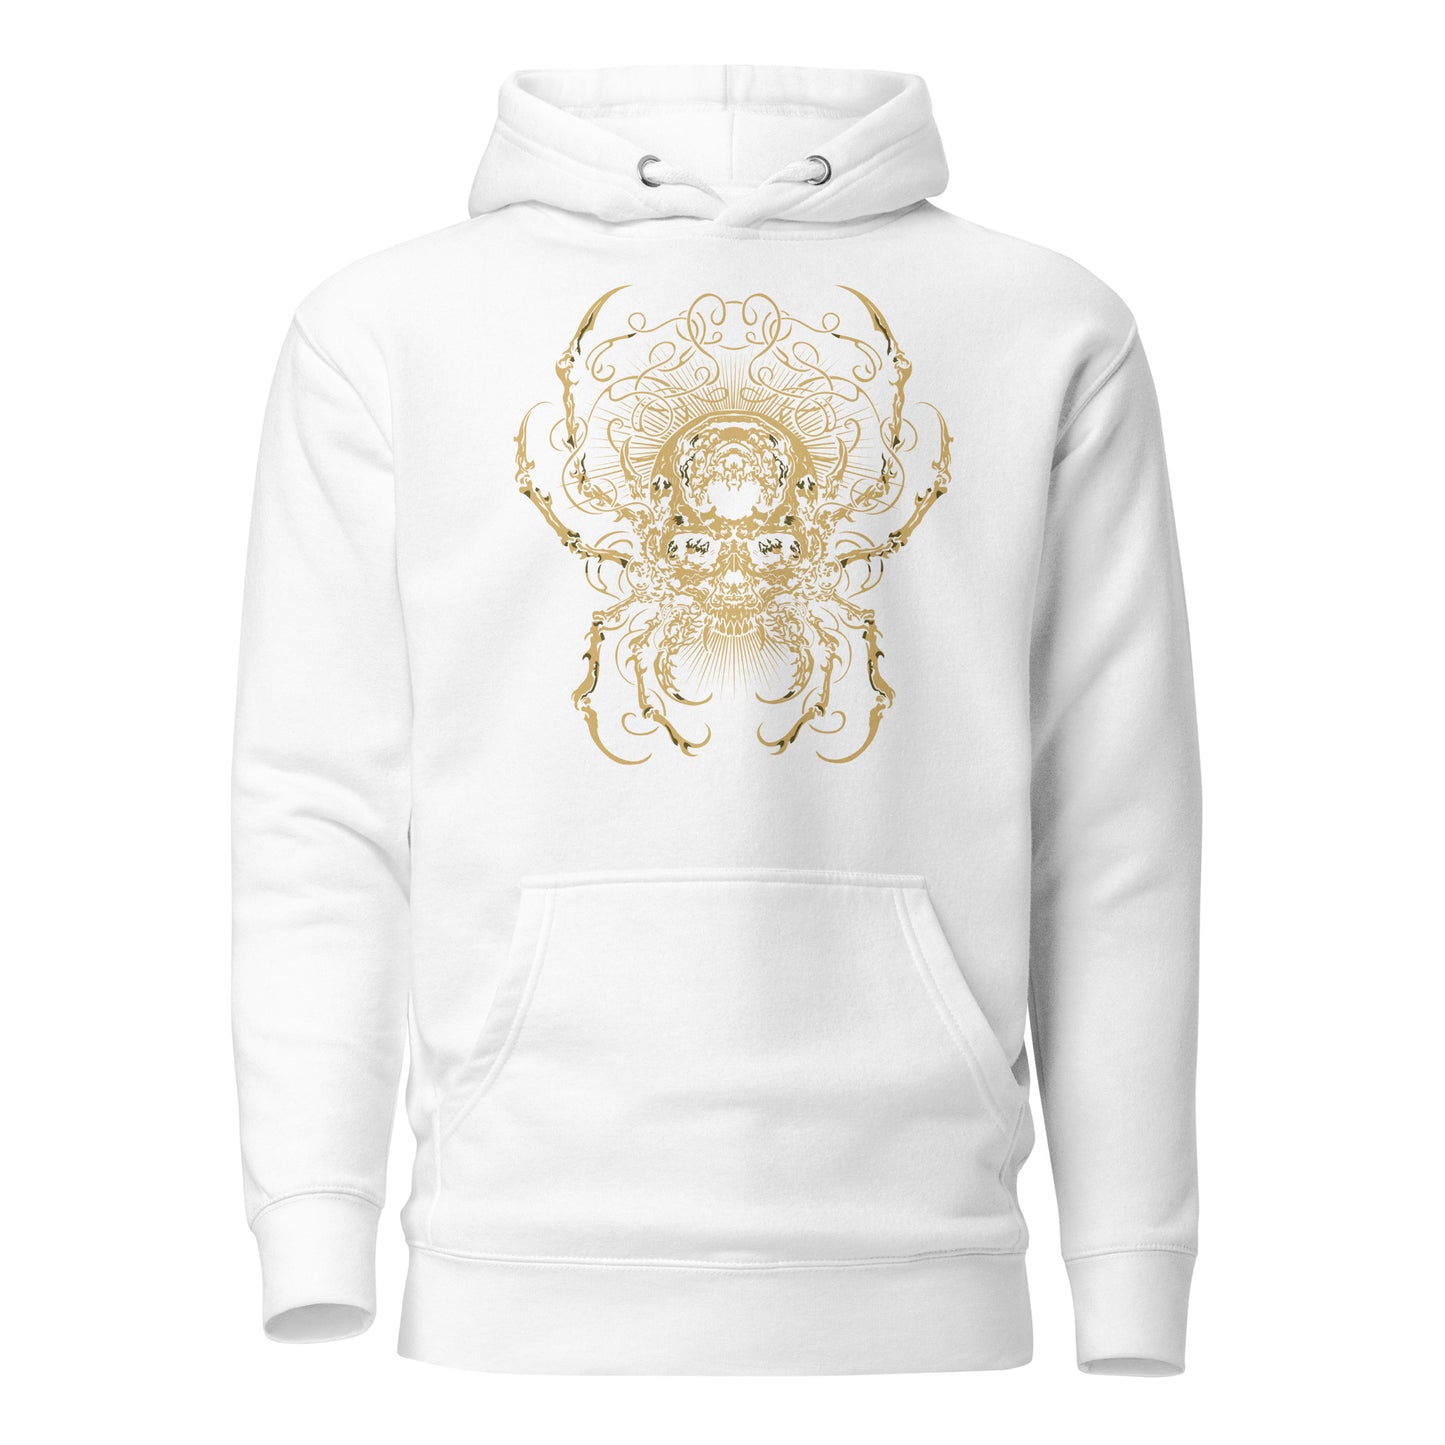 Skull Spider - Premium Unisex Hoodie - Design on the Front